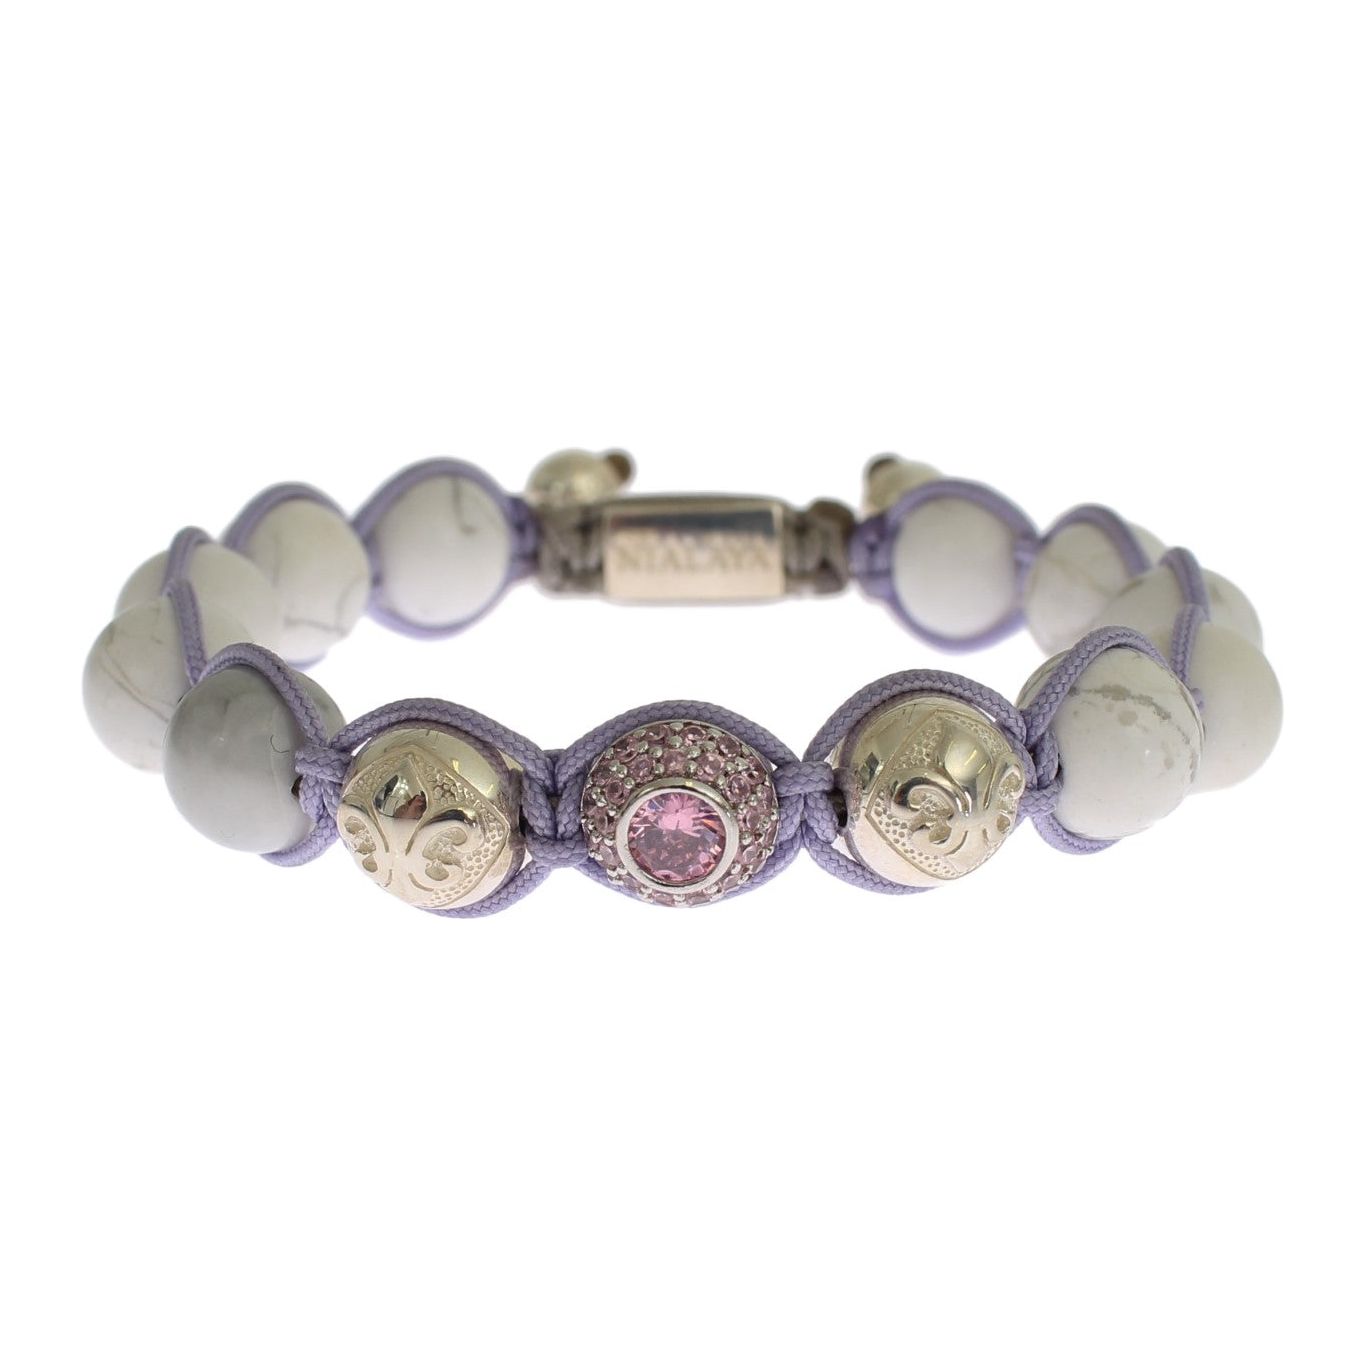 Nialaya Elegant Silver Purple CZ & Howlite Bracelet Bracelet purple-cz-howlite-925-silver-bracelet